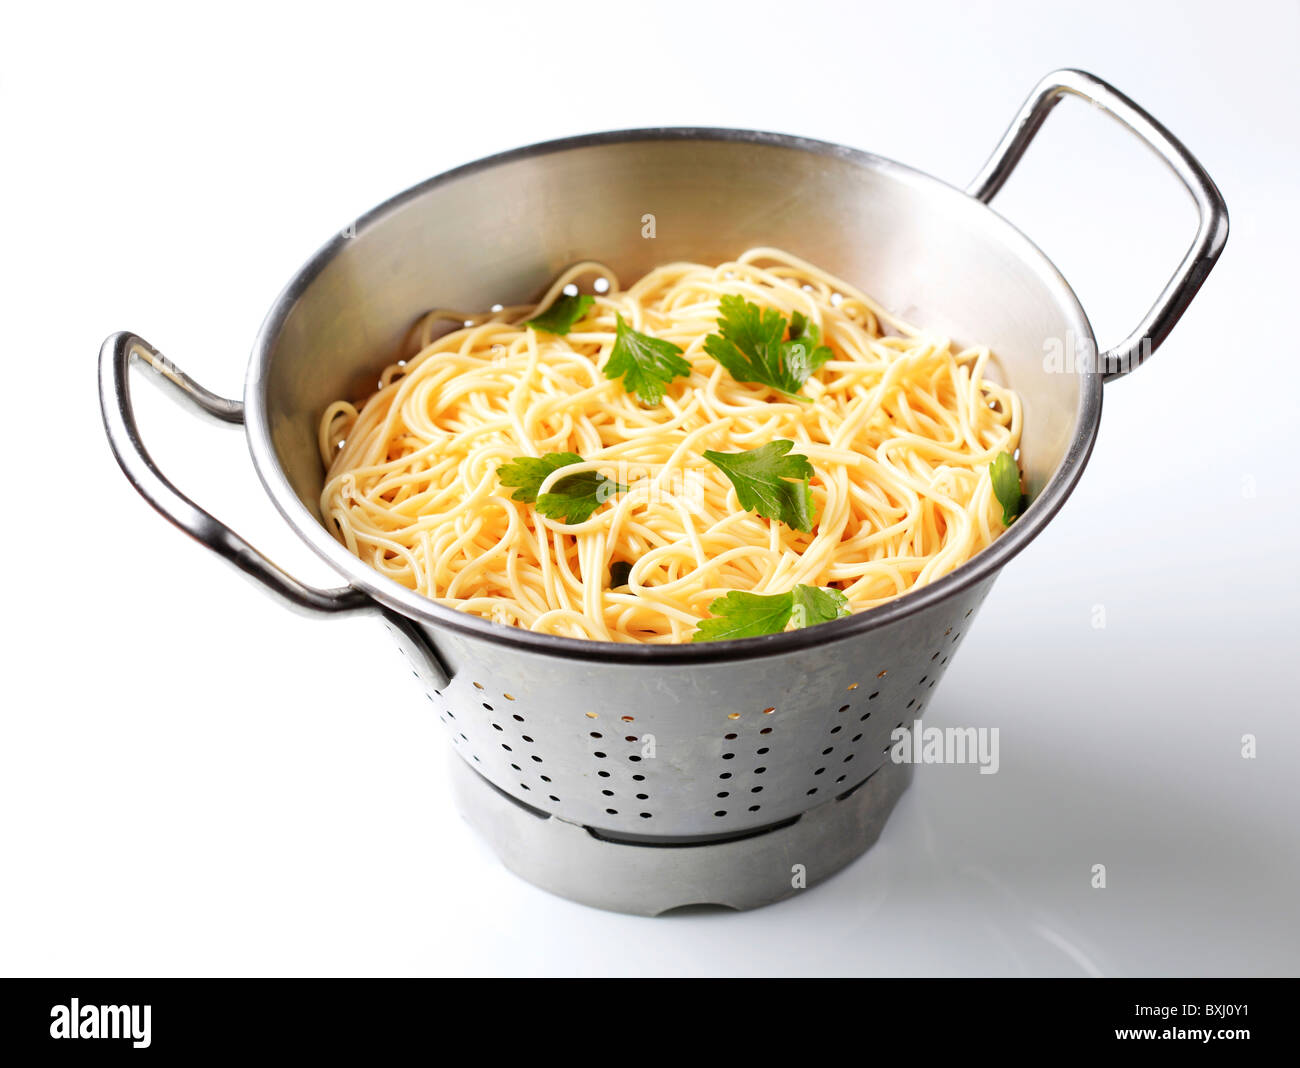 Cooked spaghetti in a colander Stock Photo